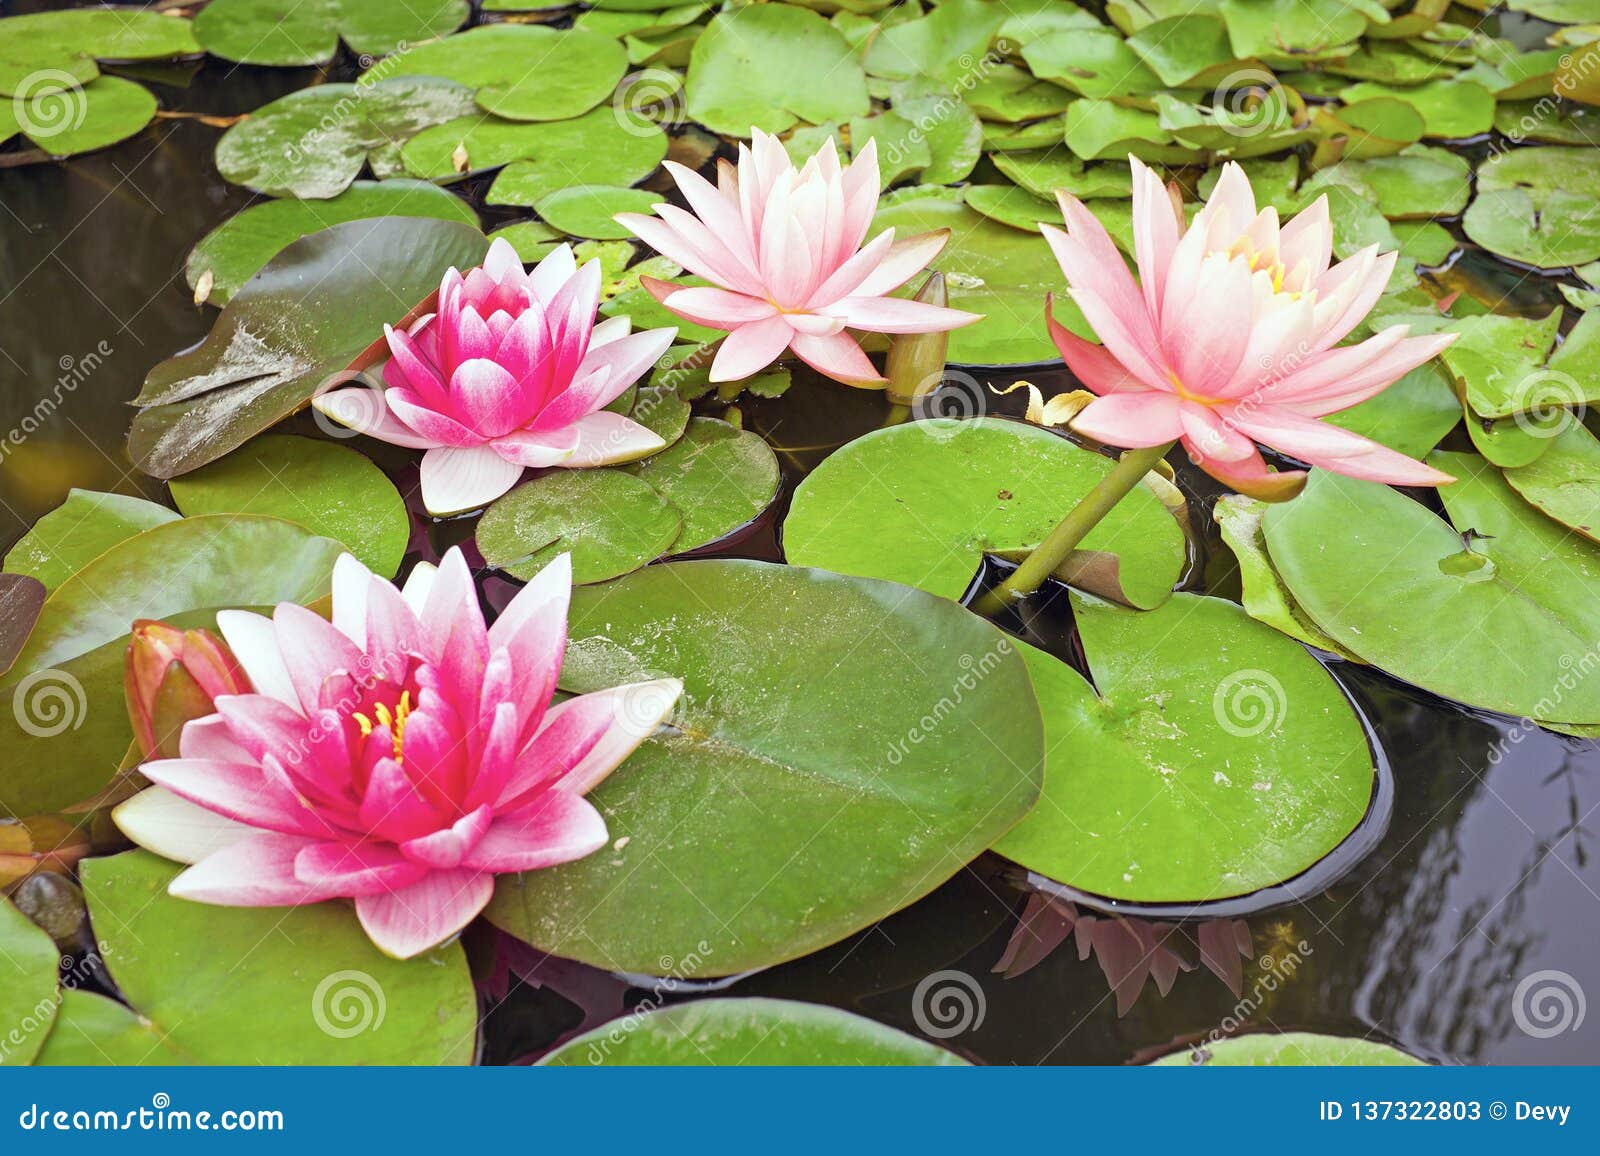 Lotus Blossoms Pads Bud Lake Nature Flowers